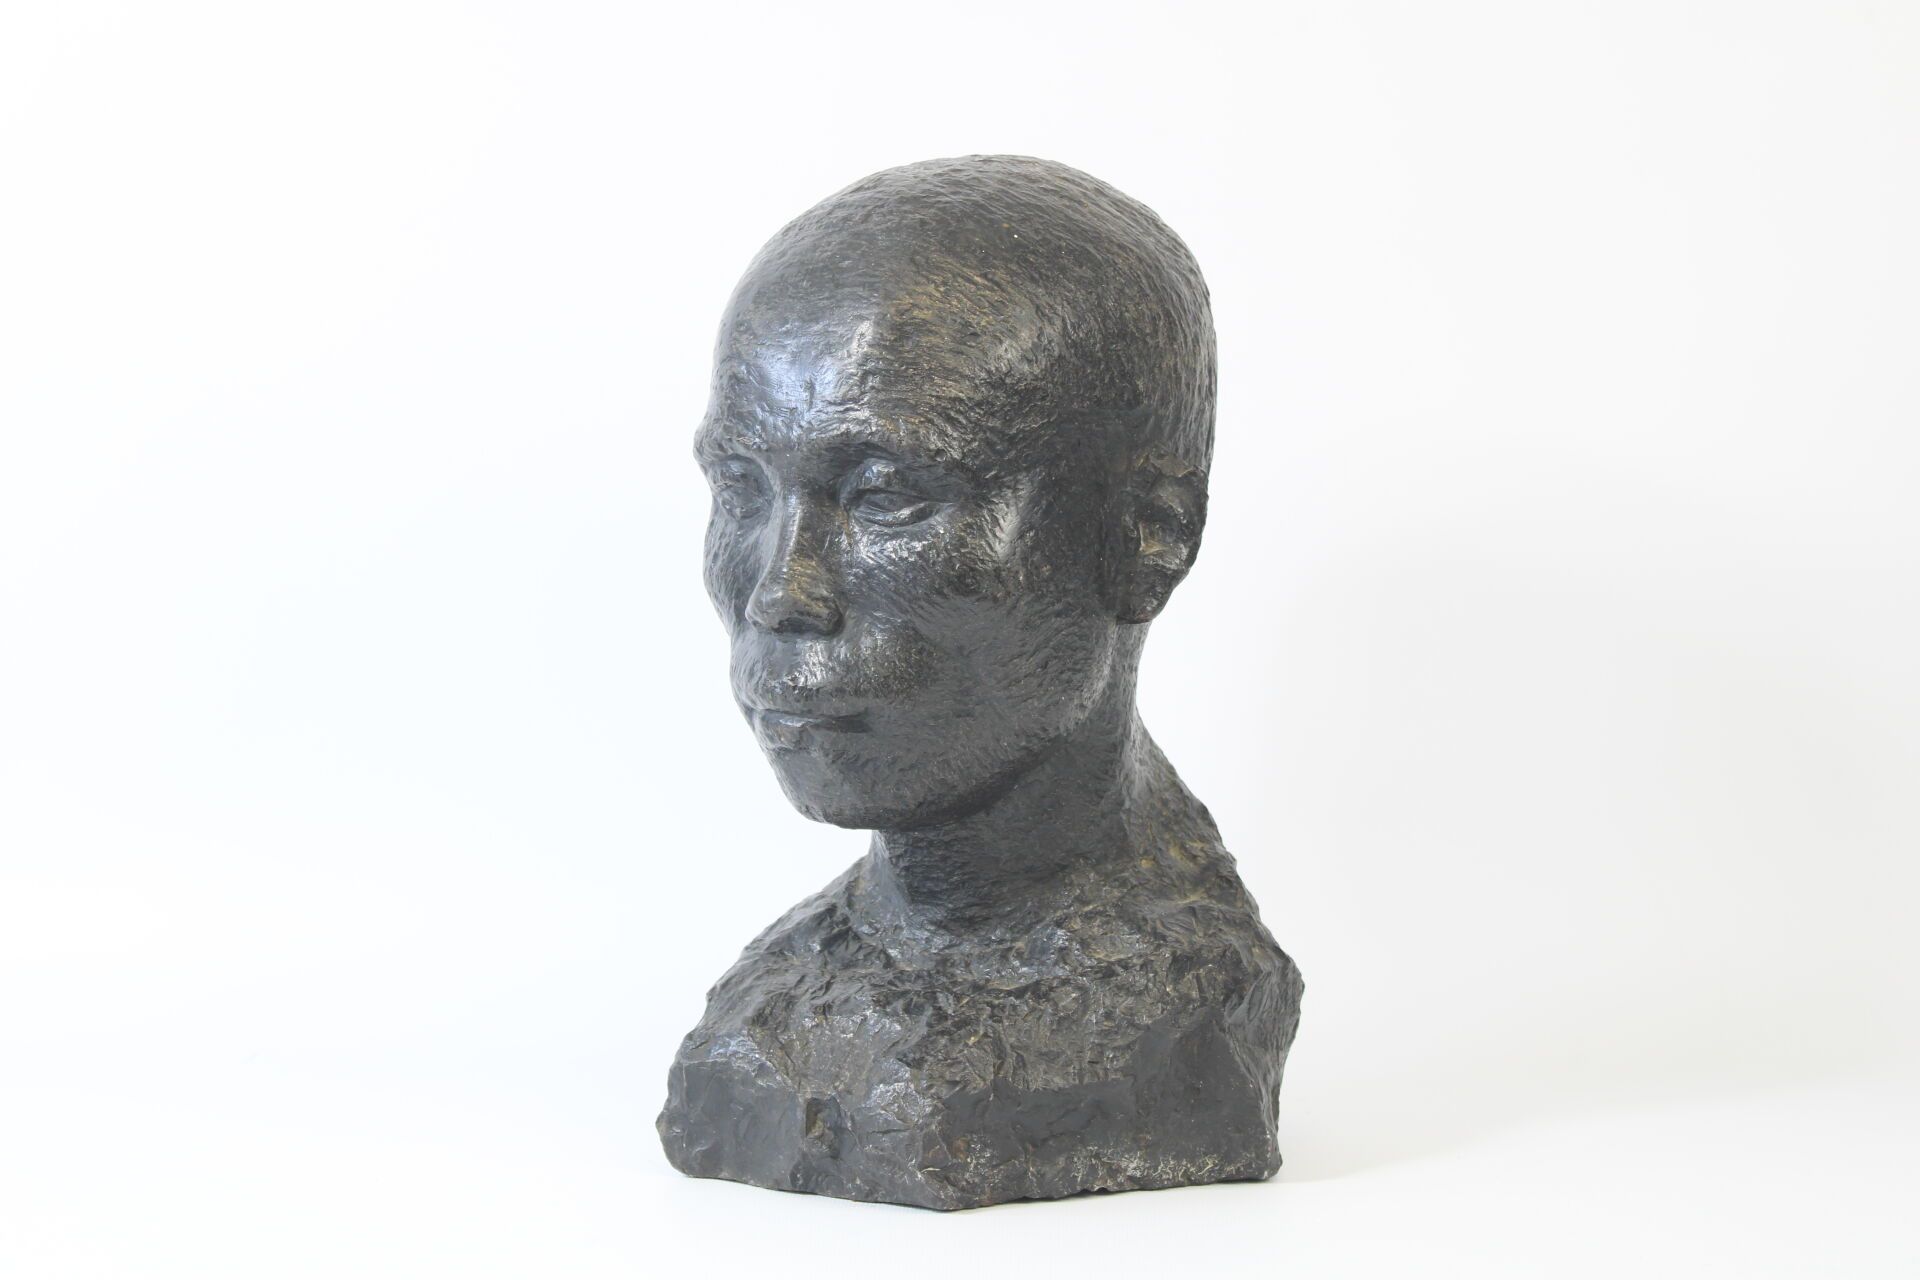 Null 20 世纪的学校。
男子头像，面部雕刻在石块上，侧面有 "DAMP "签名和 1928 年的日期。
高：36.5 厘米。
耳朵有损坏。